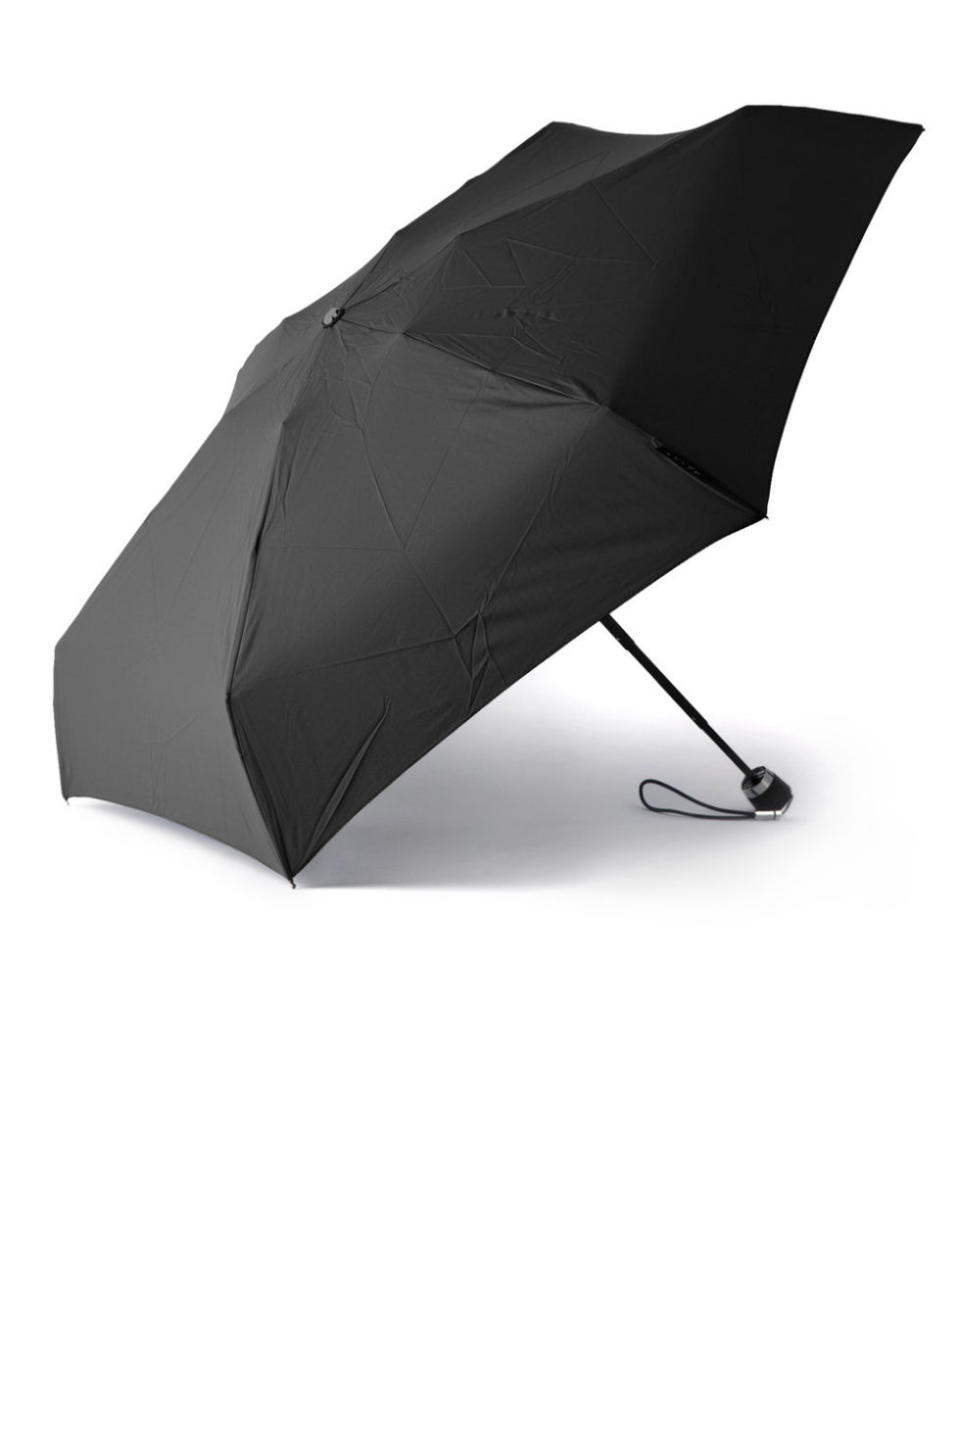 The Impossibly Portable Umbrella